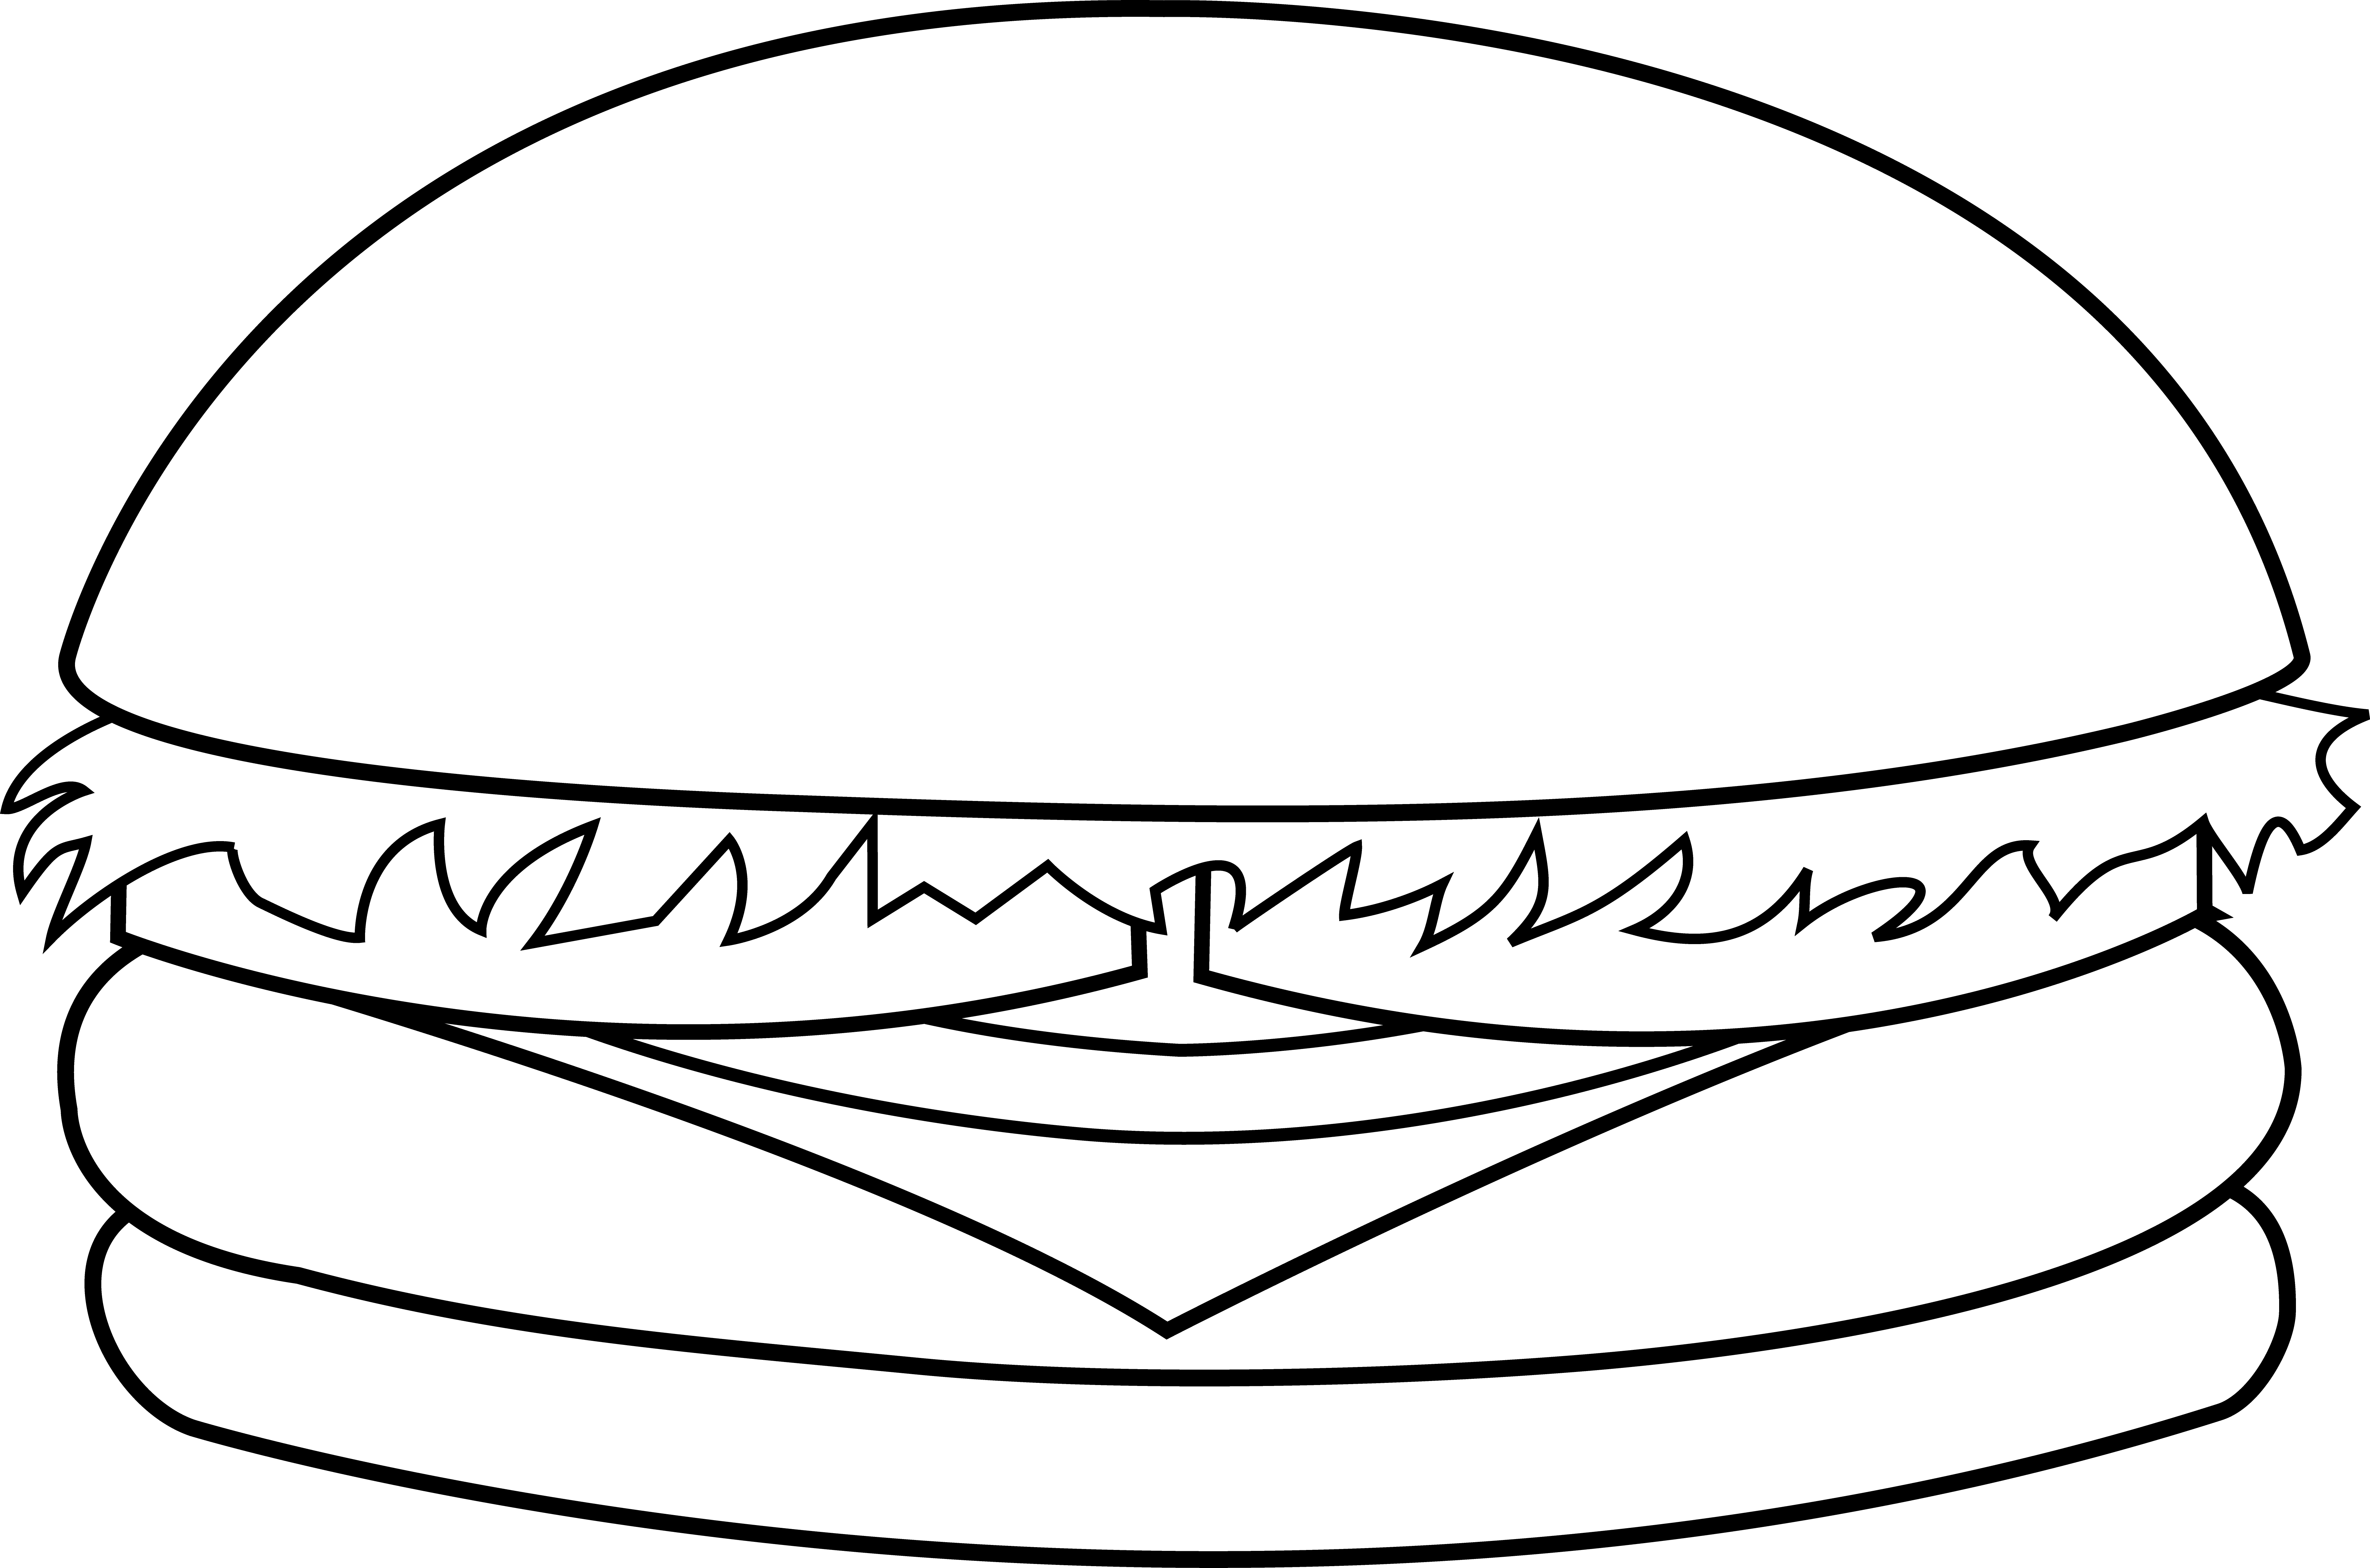 Cartoon burger image clip. Hamburger clipart black and white